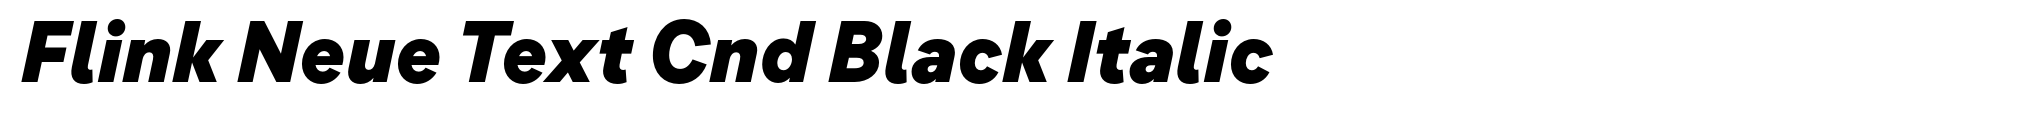 Flink Neue Text Cnd Black Italic image